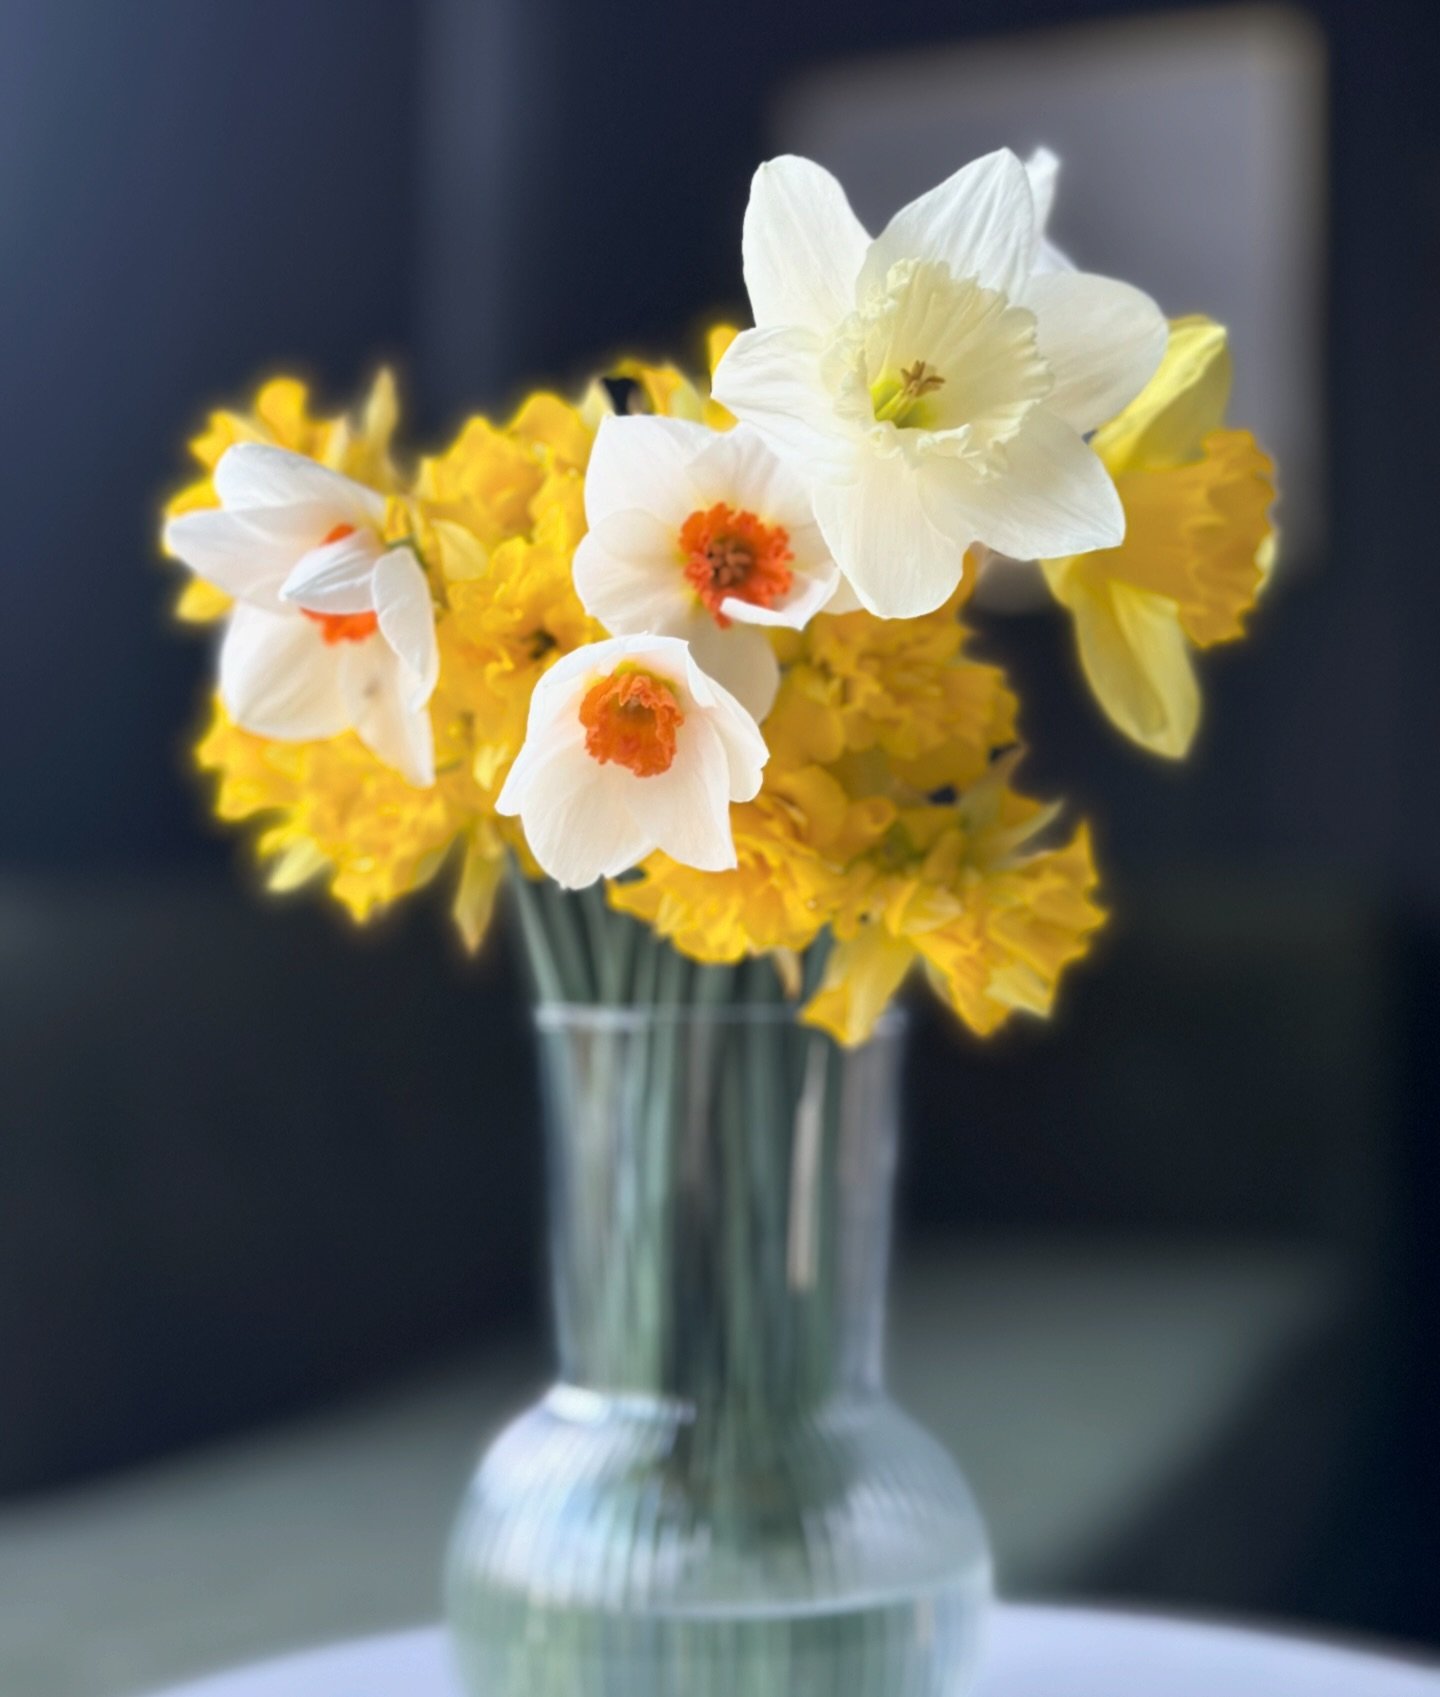 🌼 Spring has sprung 
.
.
.
#daffodils #spring